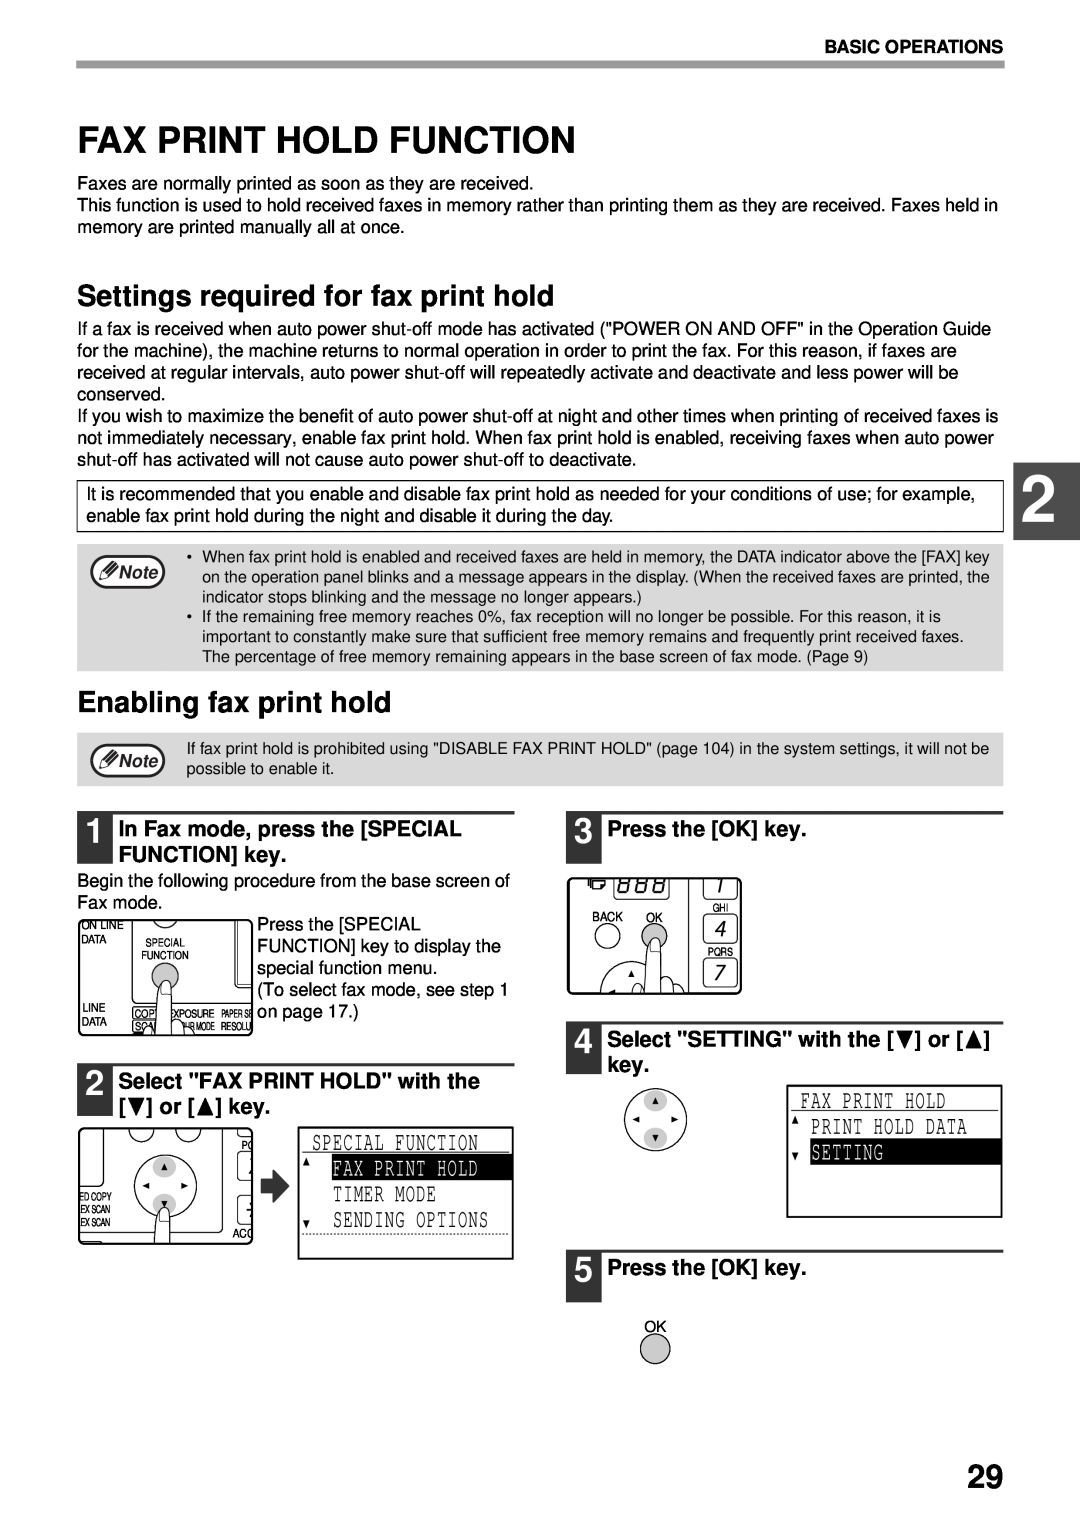 Sharp MX-FX13 Fax Print Hold Function, Settings required for fax print hold, Enabling fax print hold, Press the OK key 